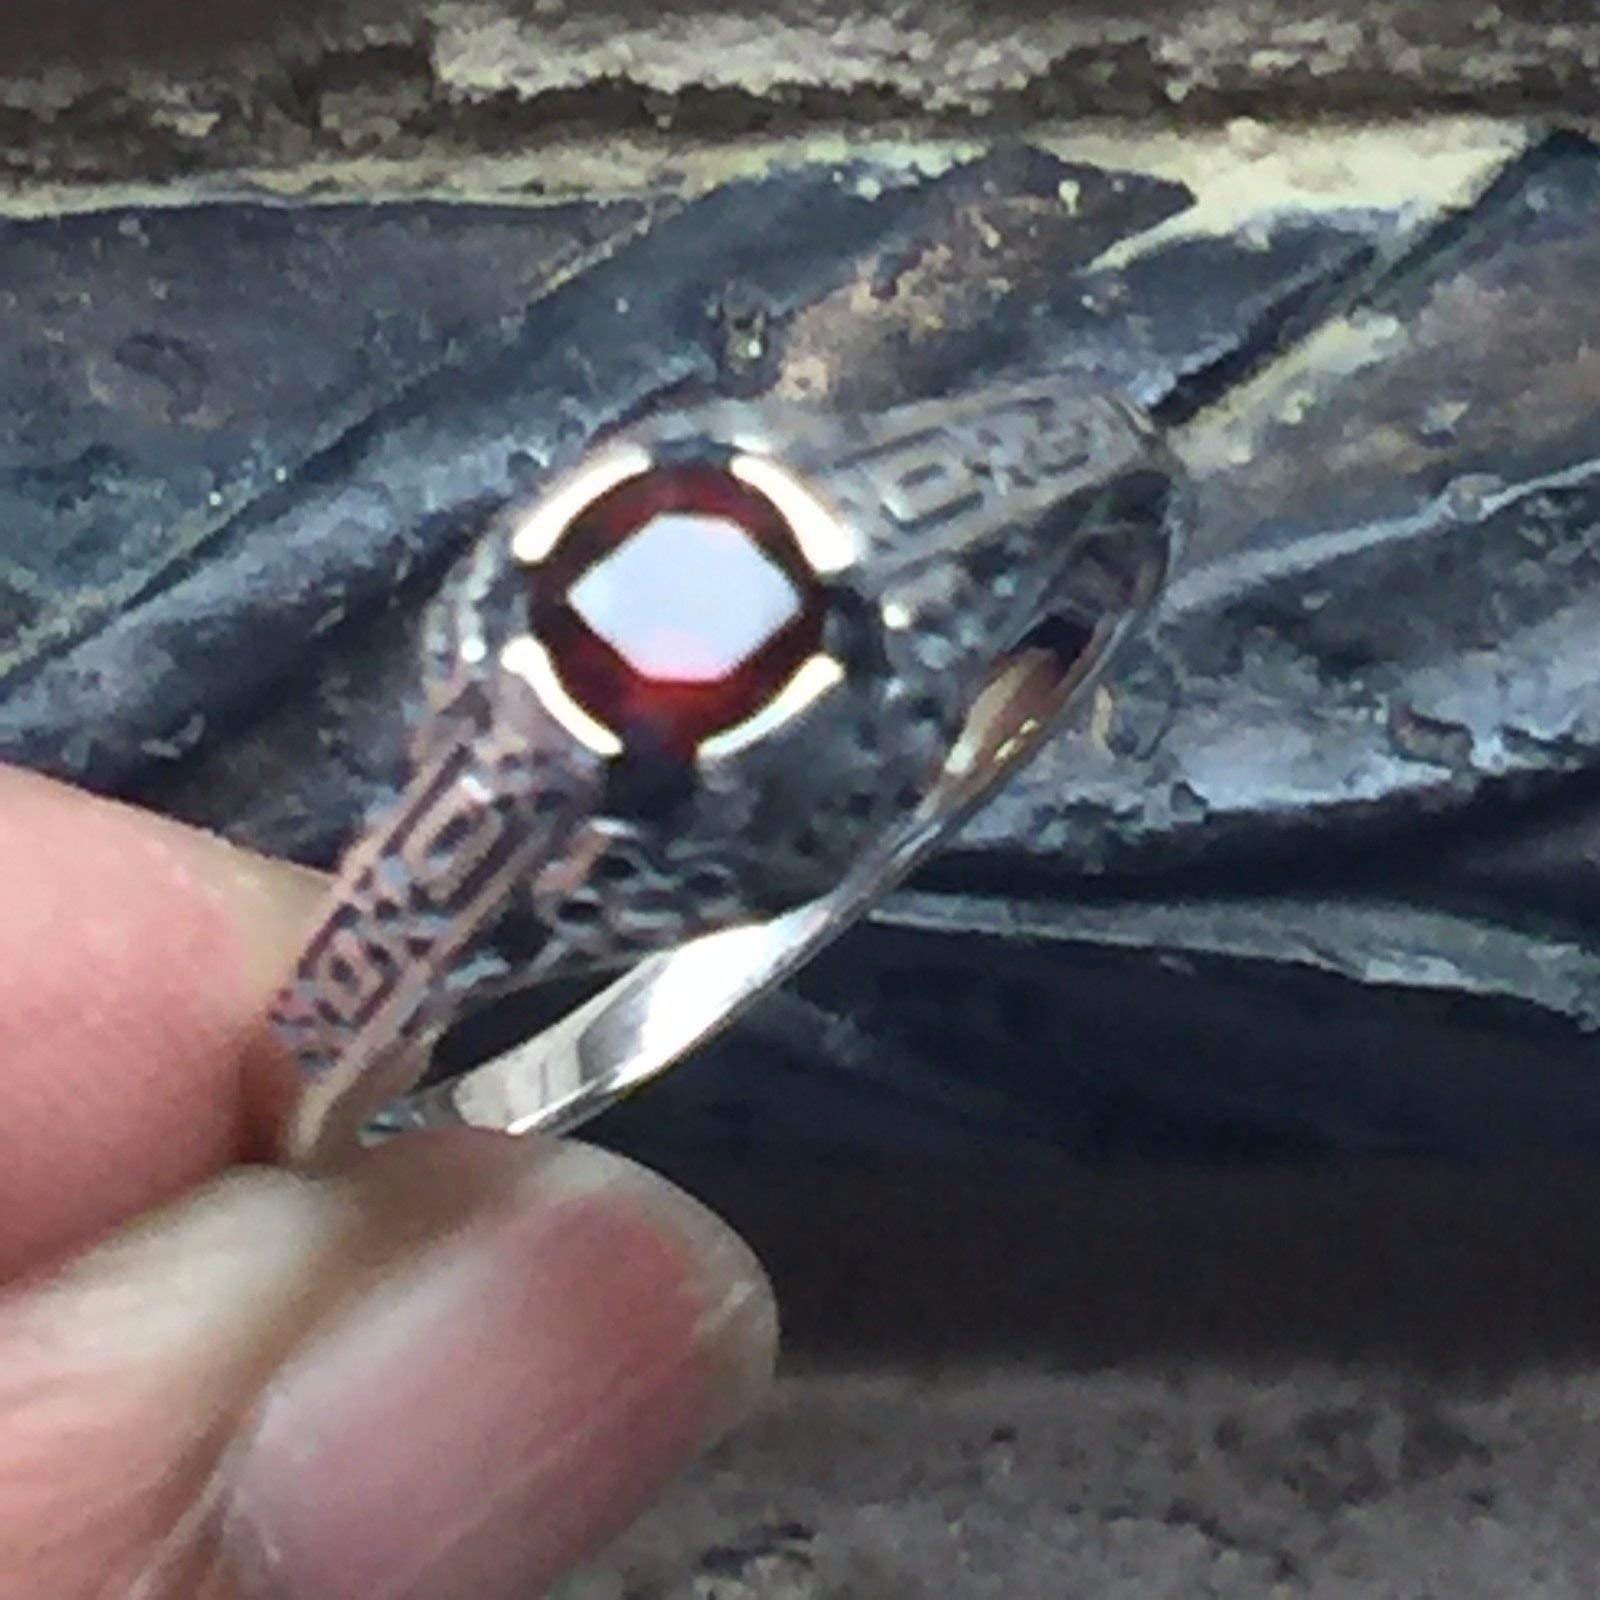 Natural Pyrope Garnet 925 Solid Sterling Silver Engagement Ring Size 6, 8 - Natural Rocks by Kala